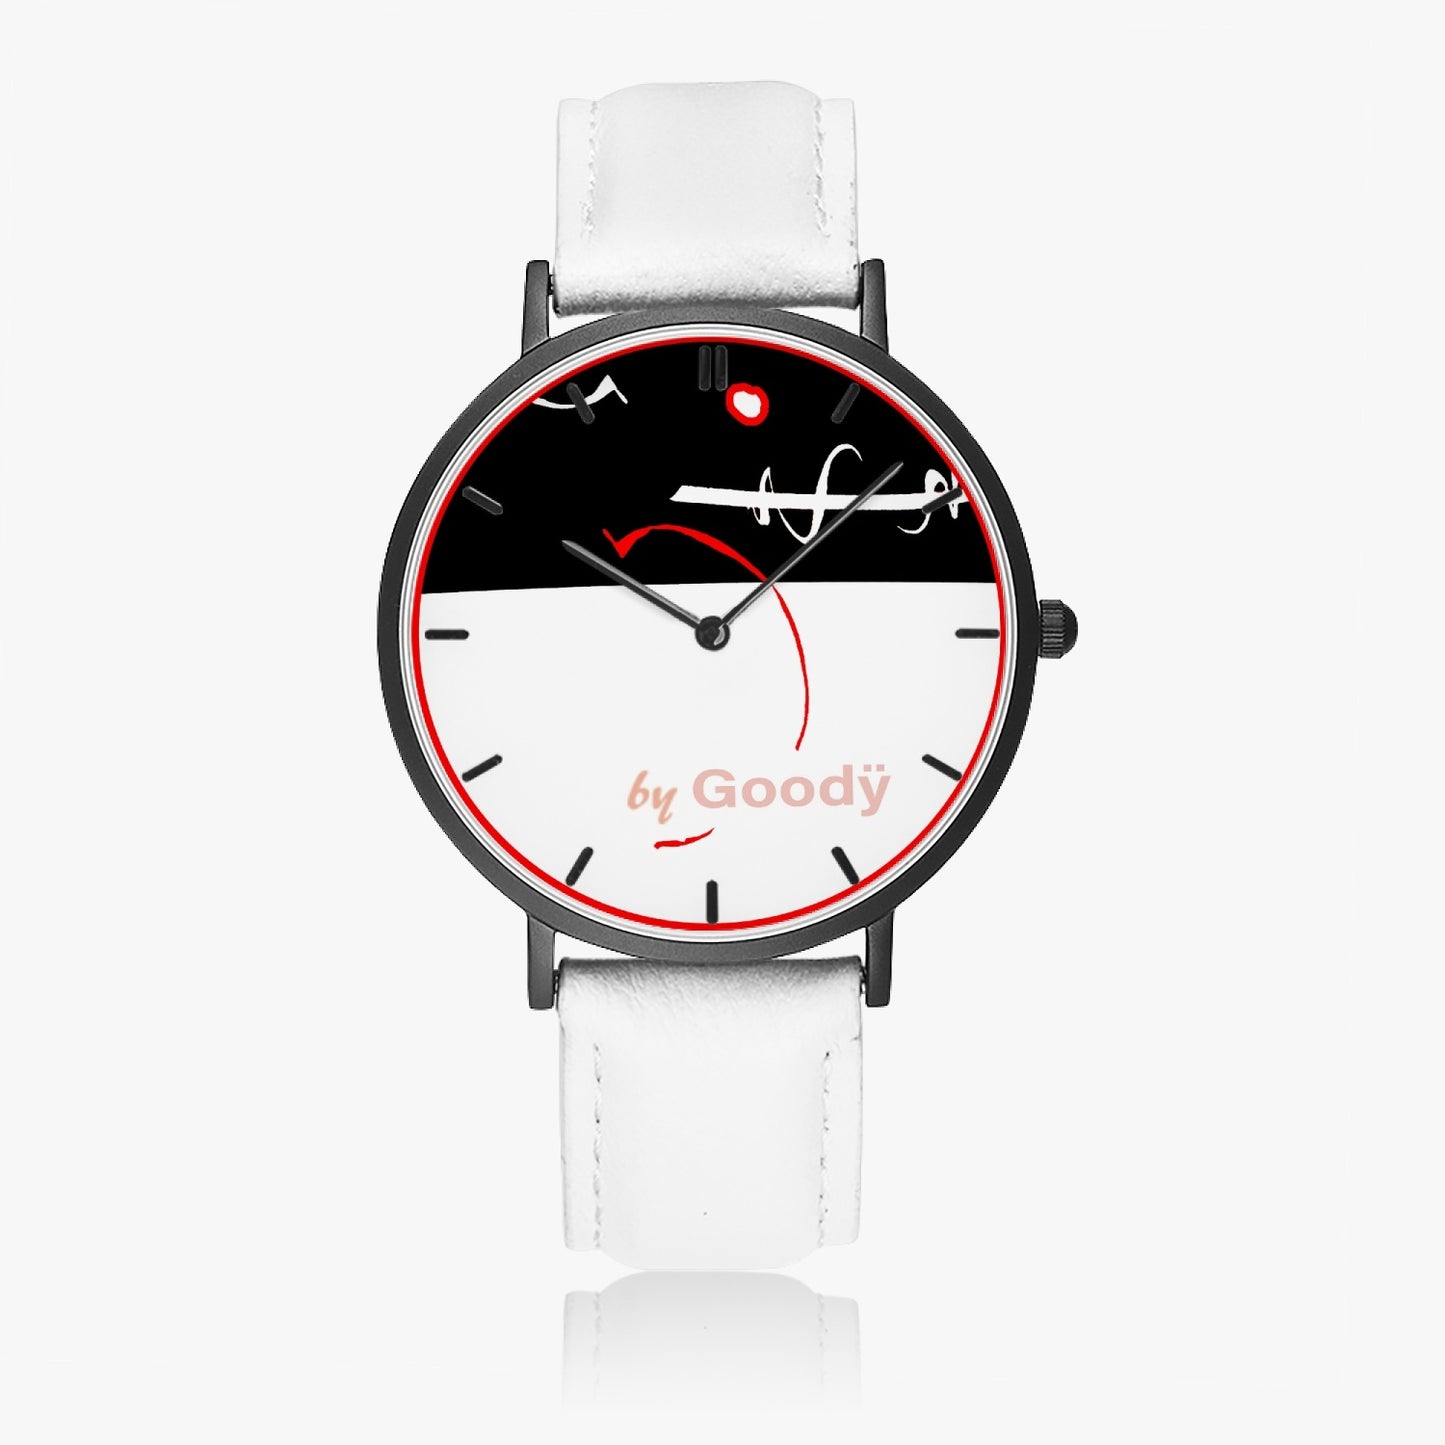 Ultra flat quartz watch "Lignerouge" (Black - with indicators)